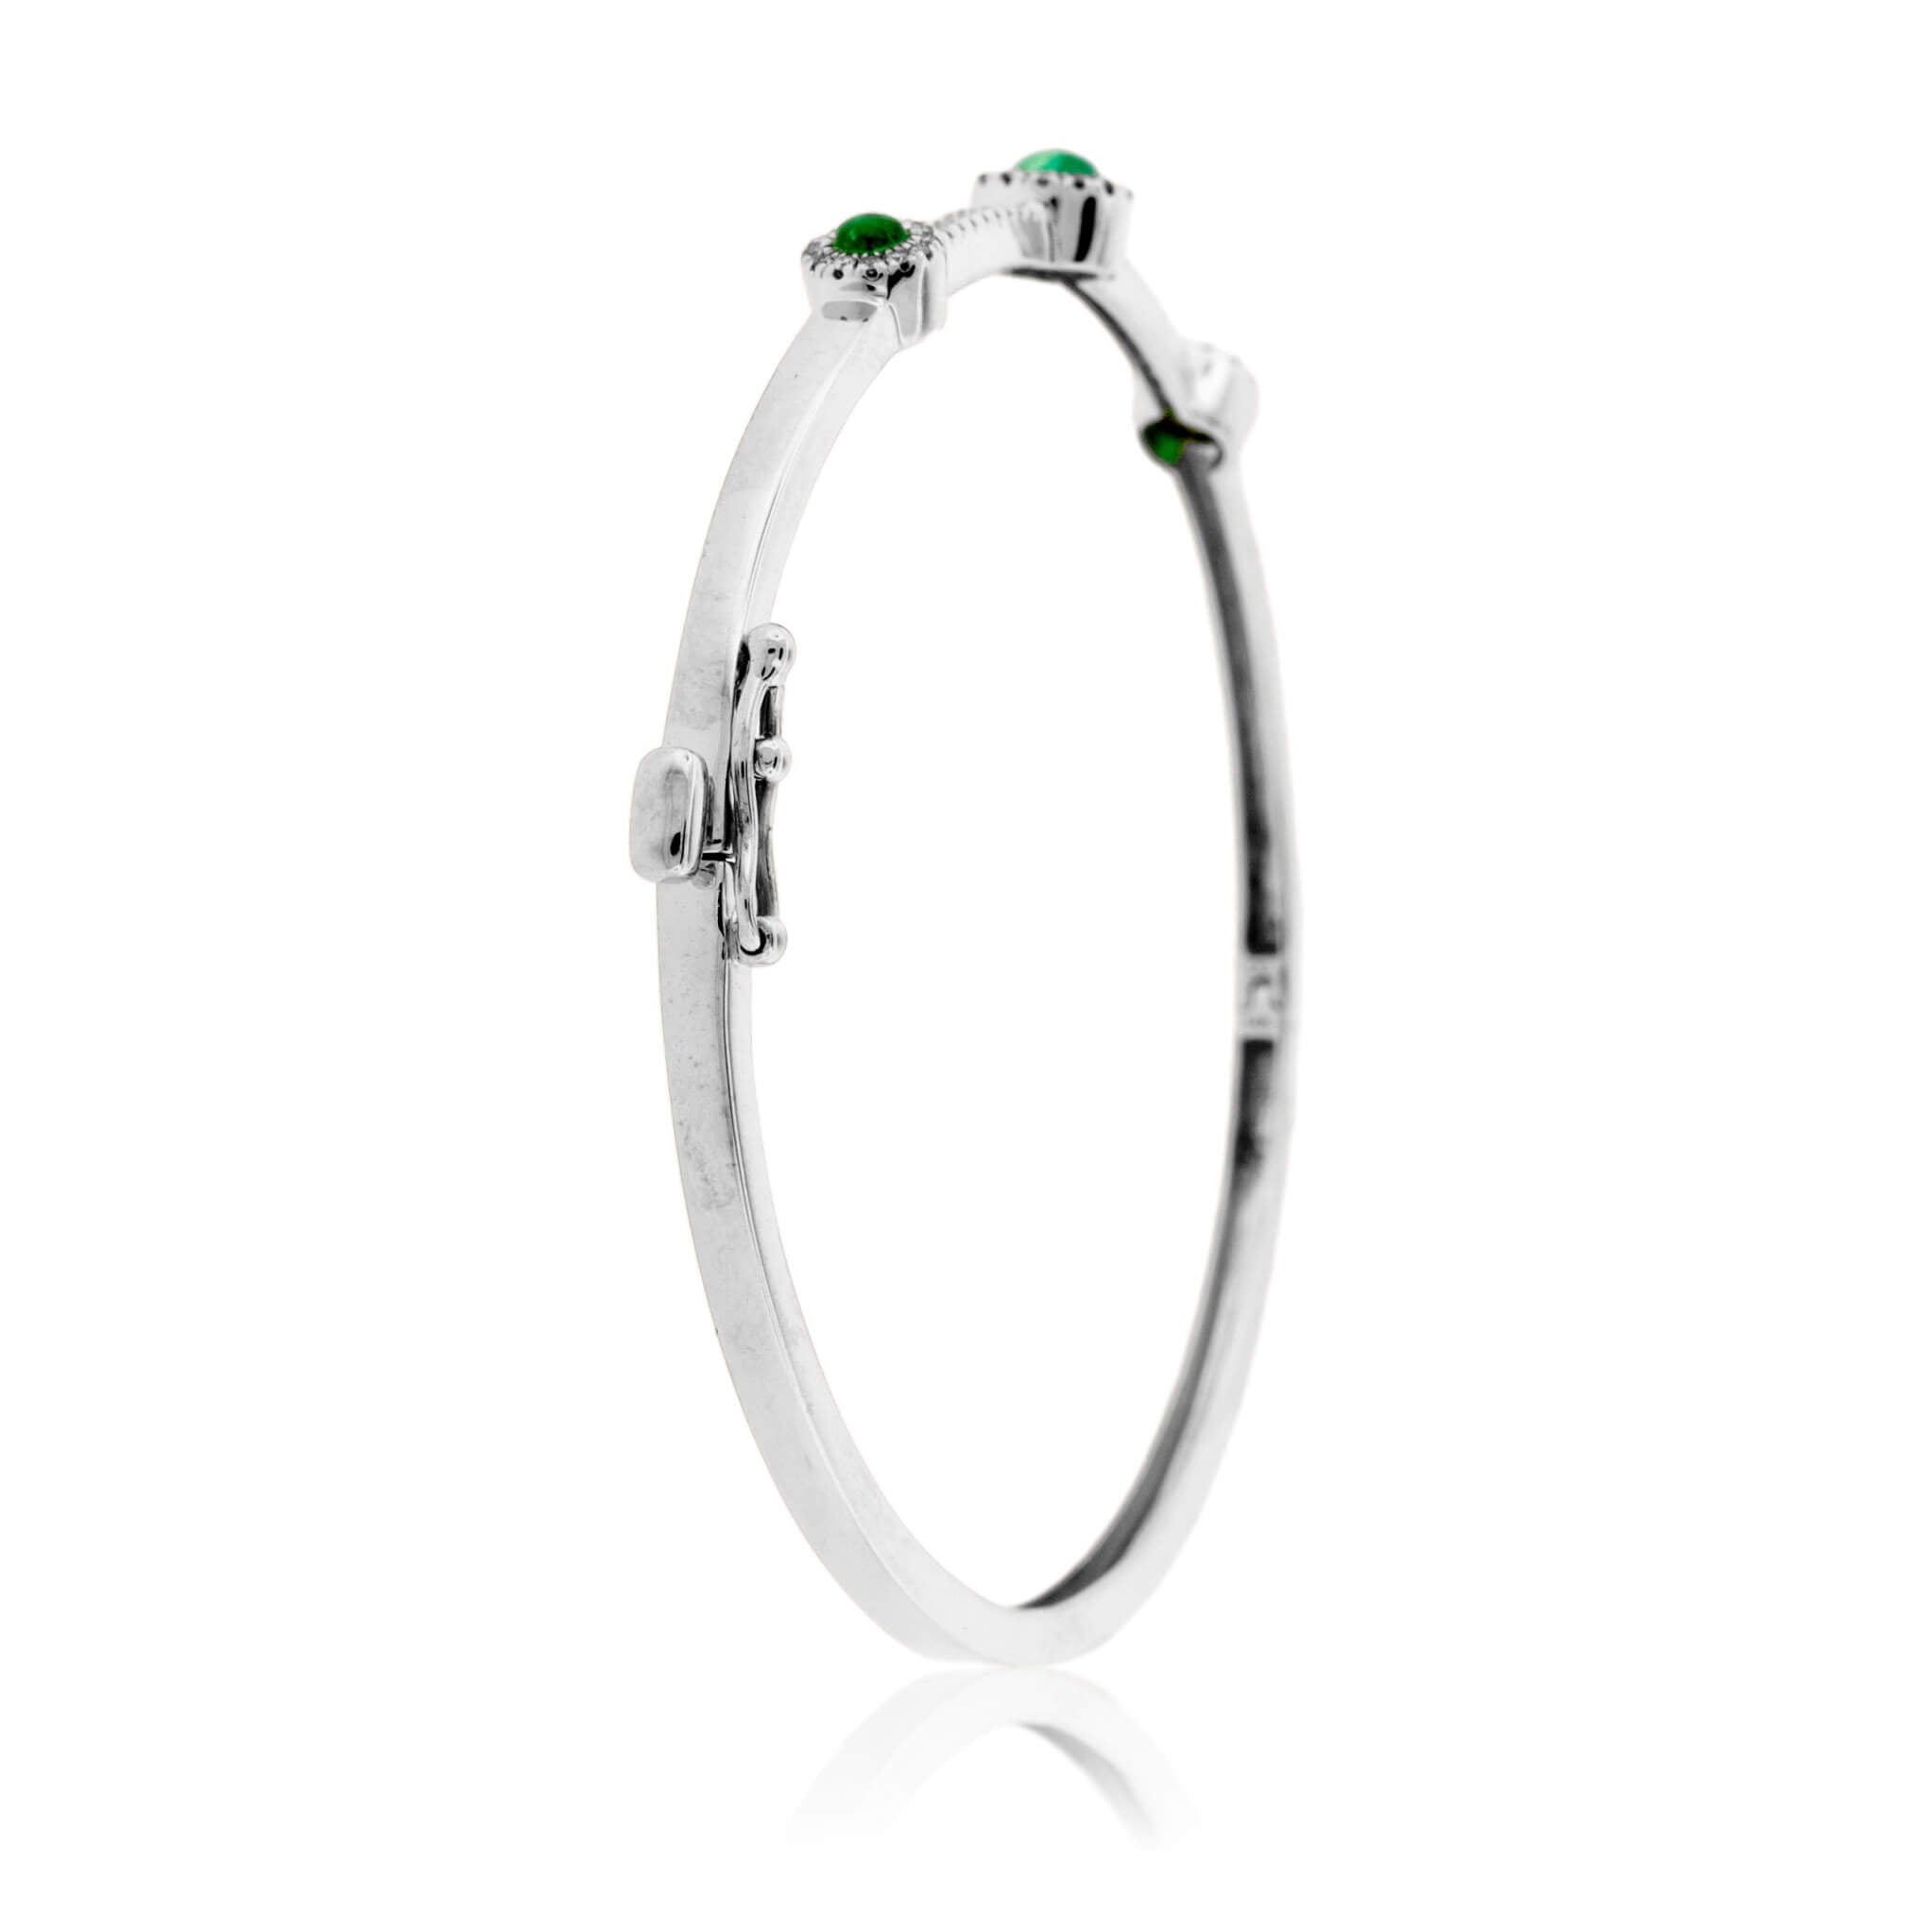 Contemporary Wide Cuff Bracelets 925 Silver Cabochon cut Emerald and  Studded CZ | eBay